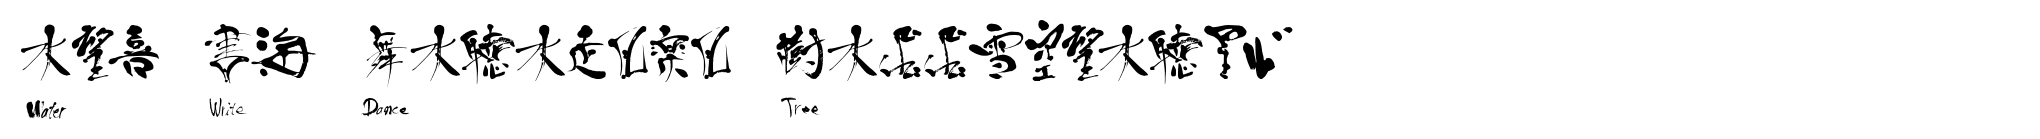 Art Of Japanese Calligraphy image